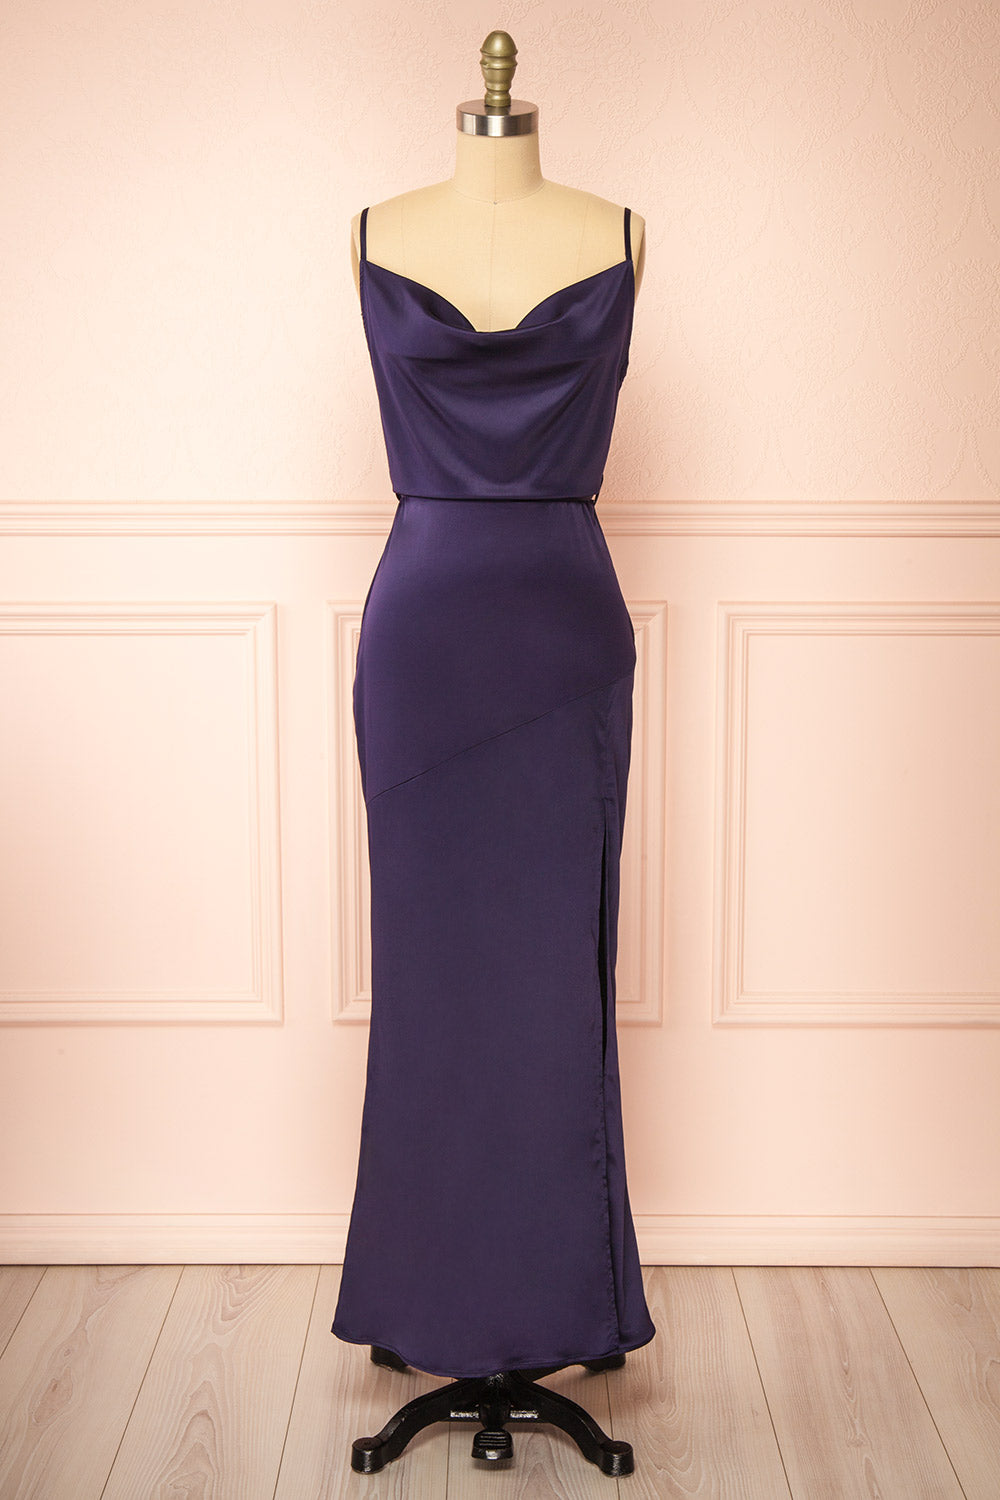 Hanya Long Satin Navy Slip Dress w/ Adjustable Waist | Boutique 1861 front view